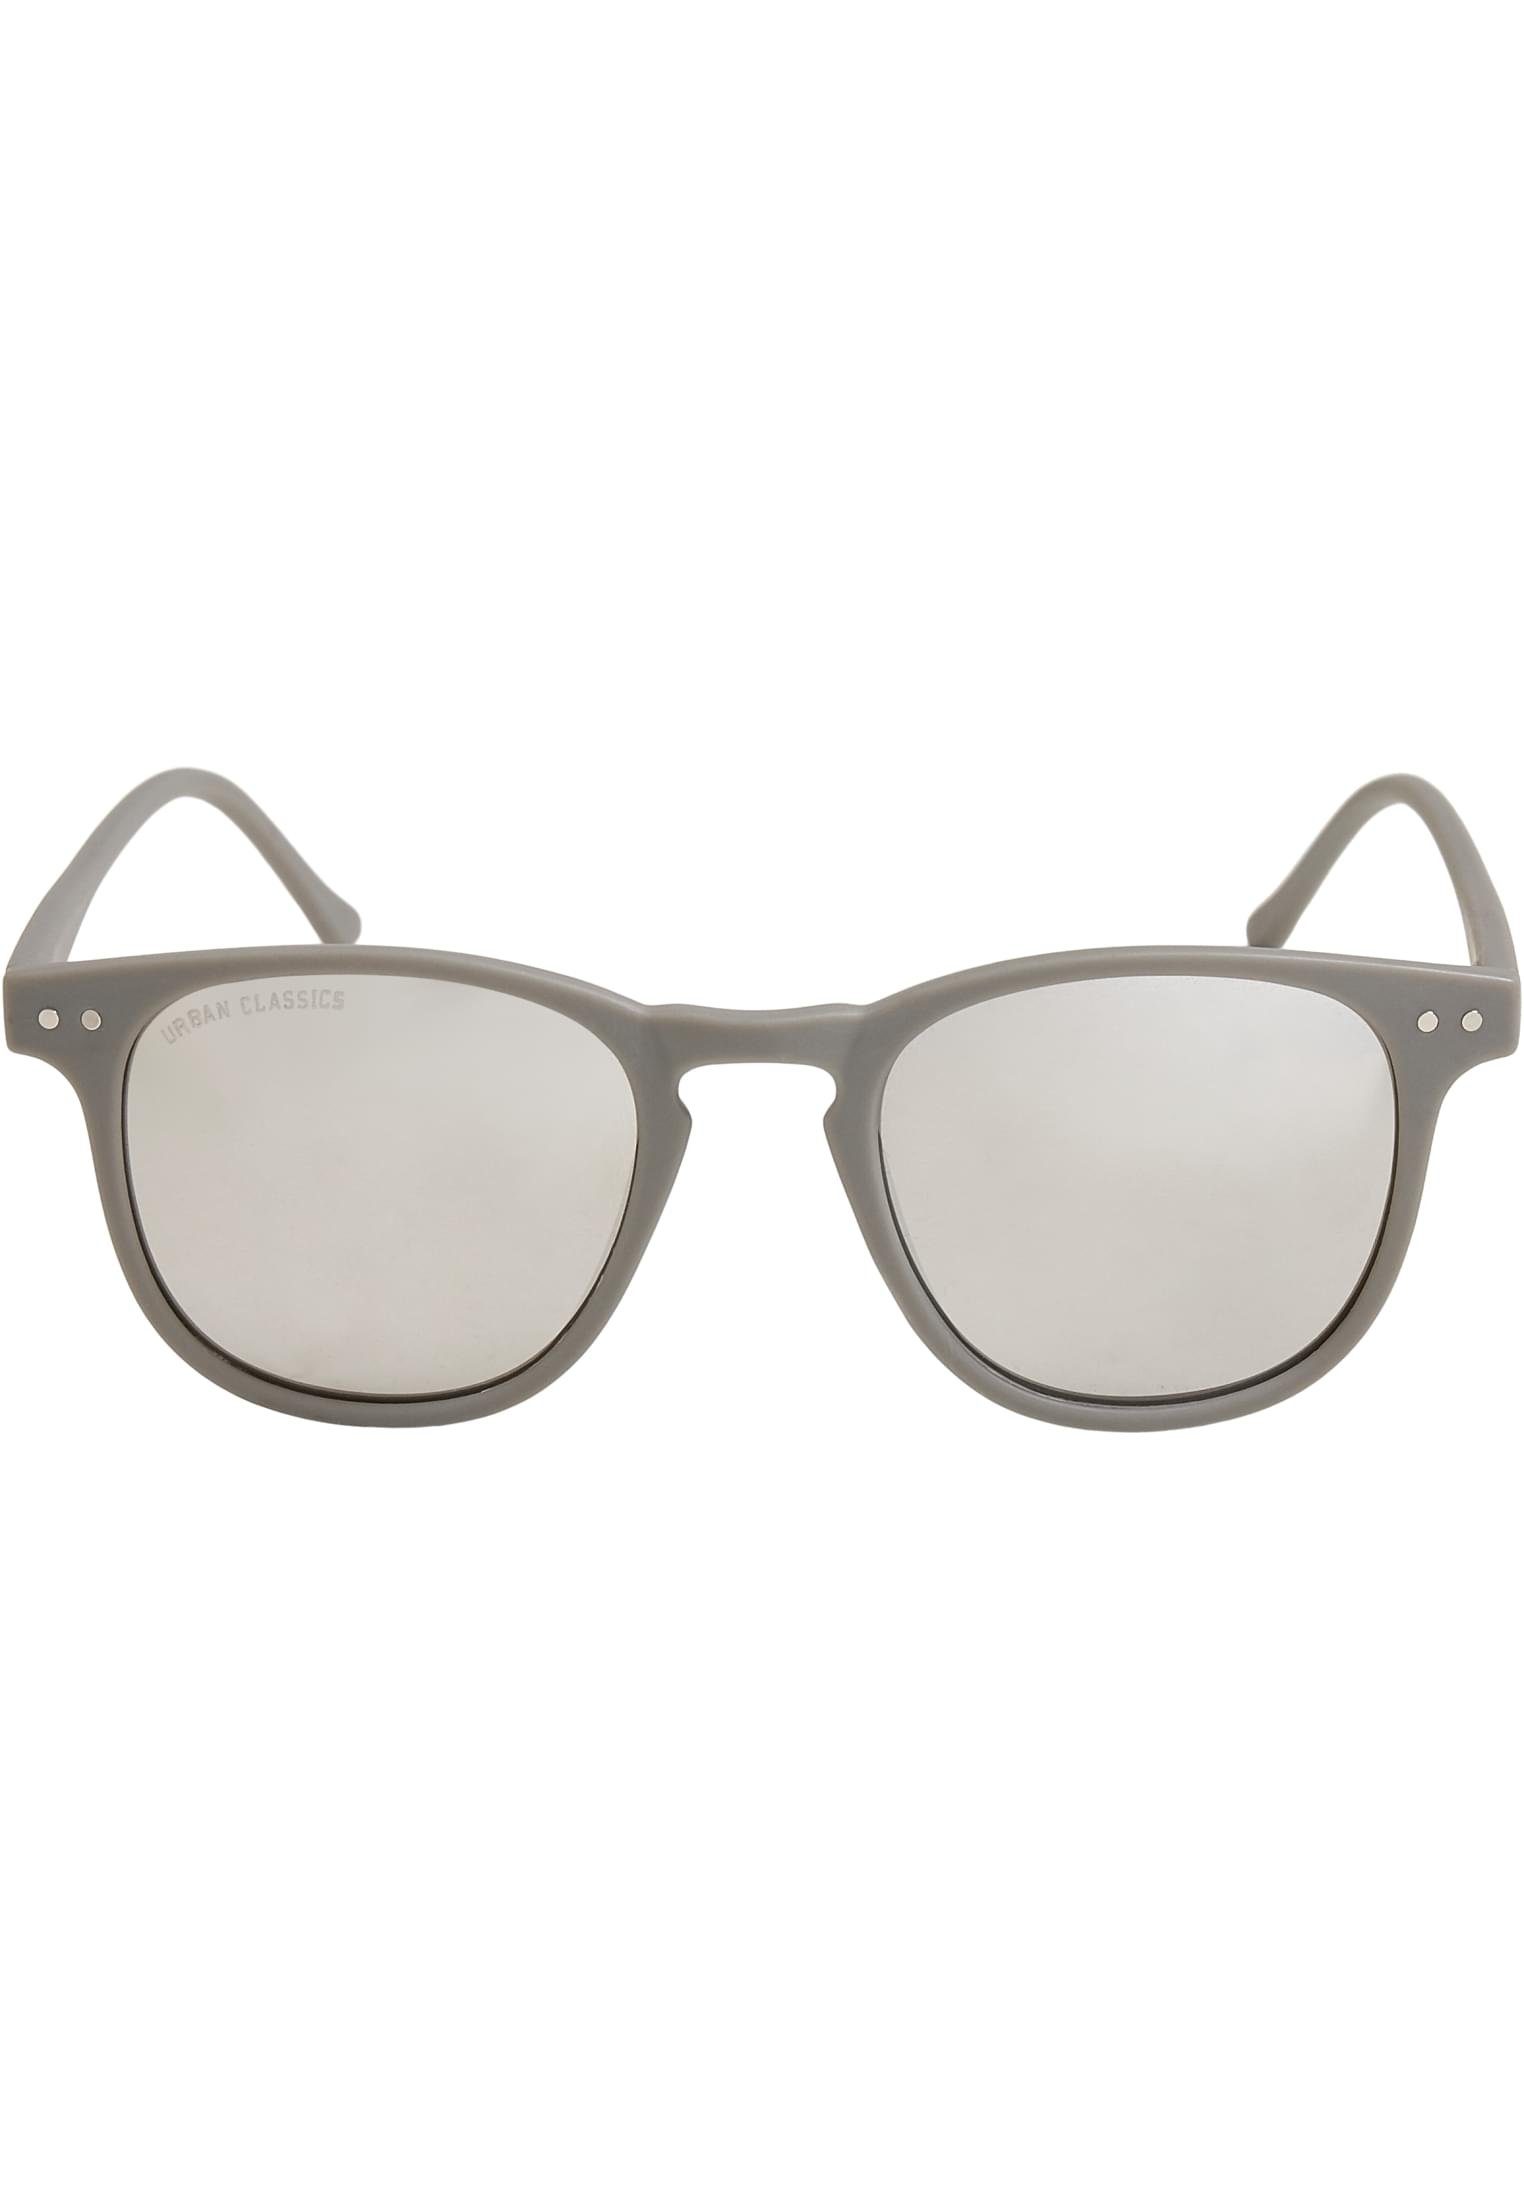 Sunglasses Arthur Chain grey/silver URBAN Sonnenbrille Unisex with CLASSICS